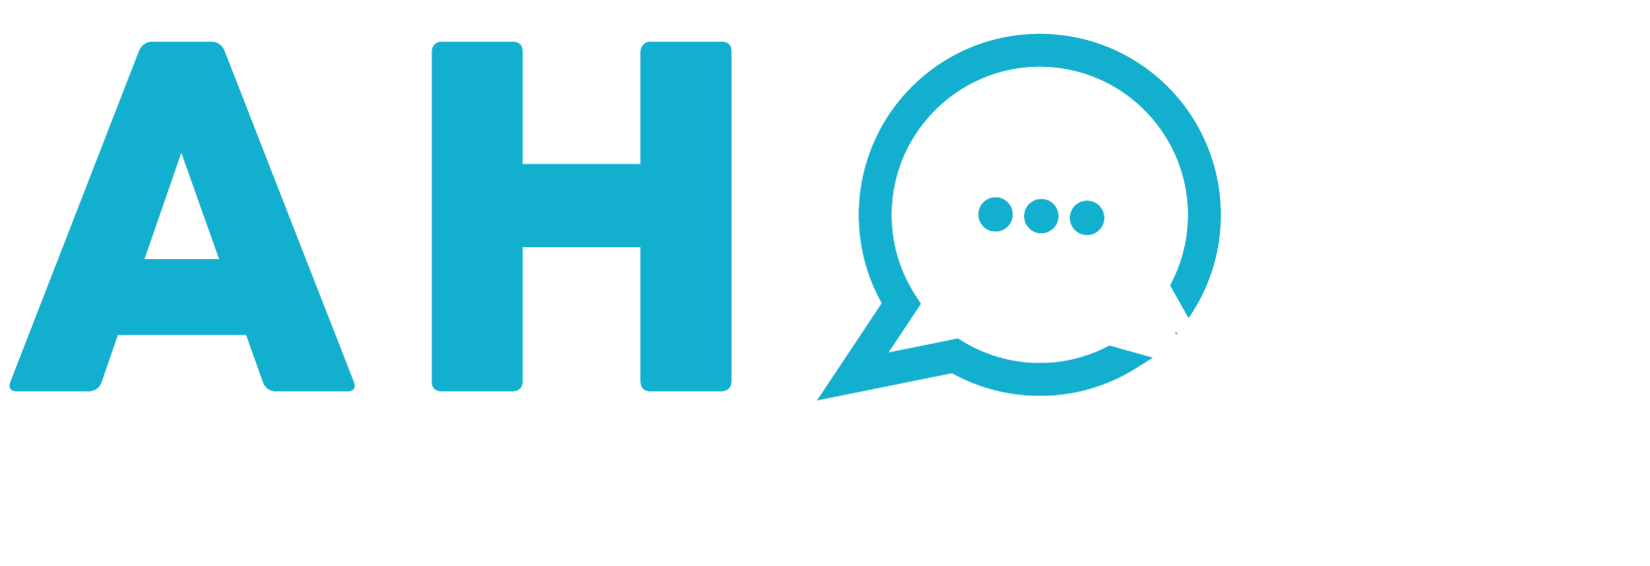 Advancing Health Online Initiative (AHO)